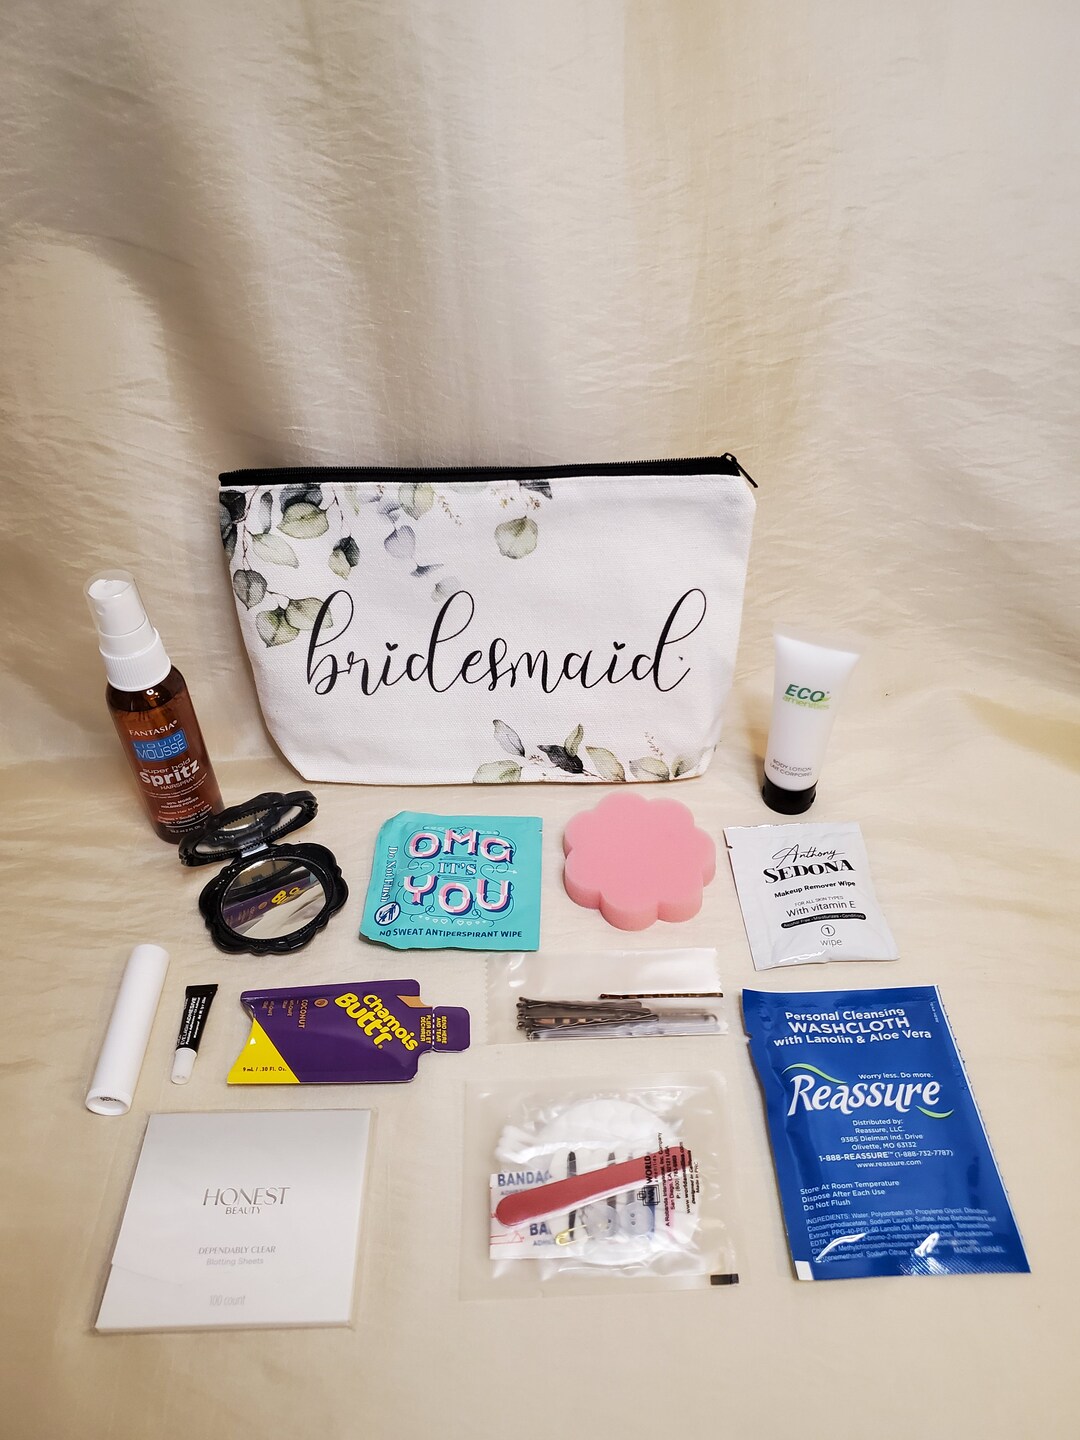 Bridesmaid Survival Bag – Frill Seekers Gifts